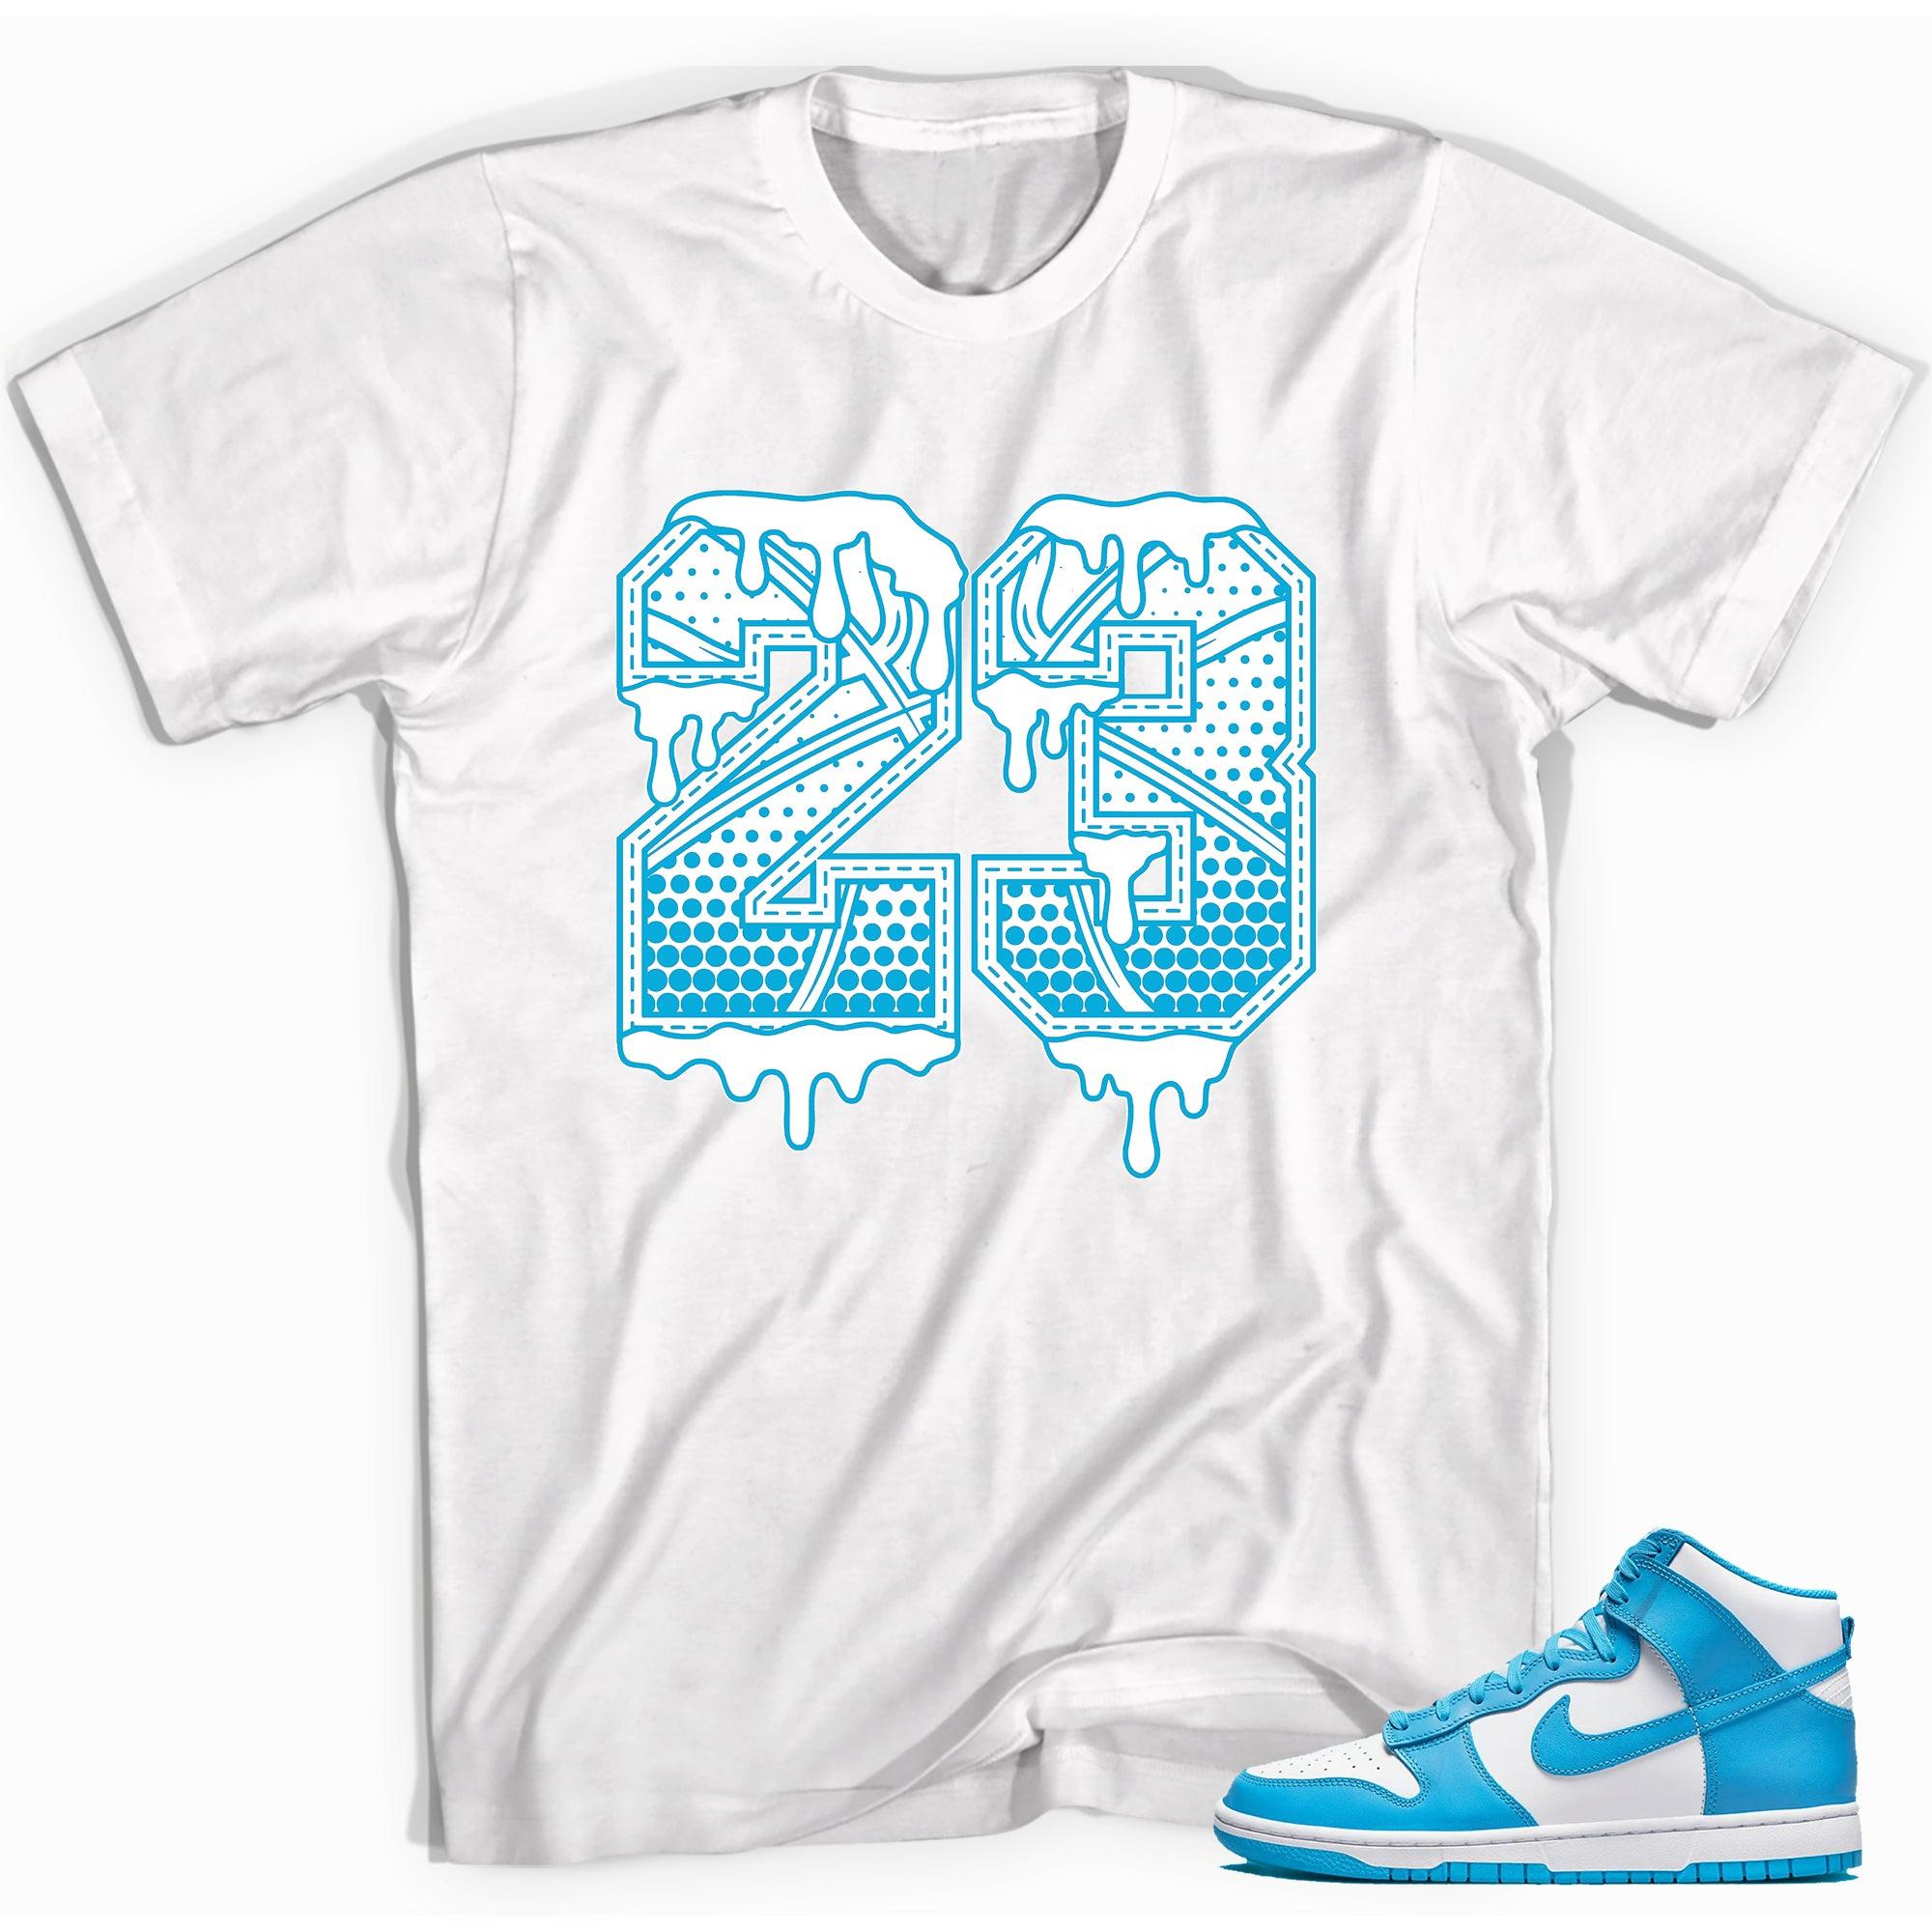 Number 23 Ball Shirt Nike Dunk High Retro Laser Blue photo